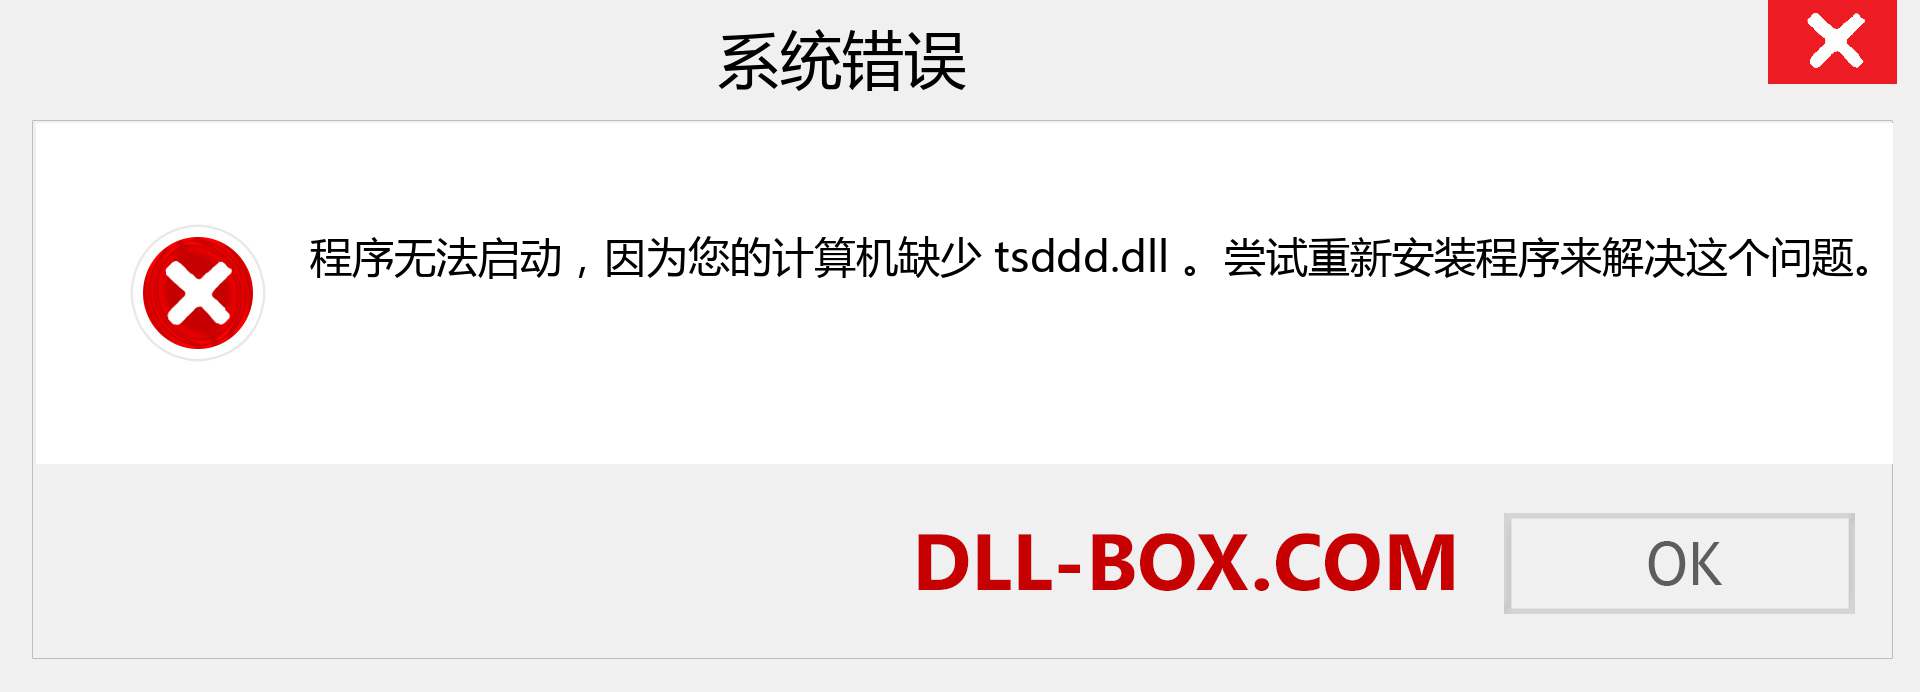 tsddd.dll 文件丢失？。 适用于 Windows 7、8、10 的下载 - 修复 Windows、照片、图像上的 tsddd dll 丢失错误